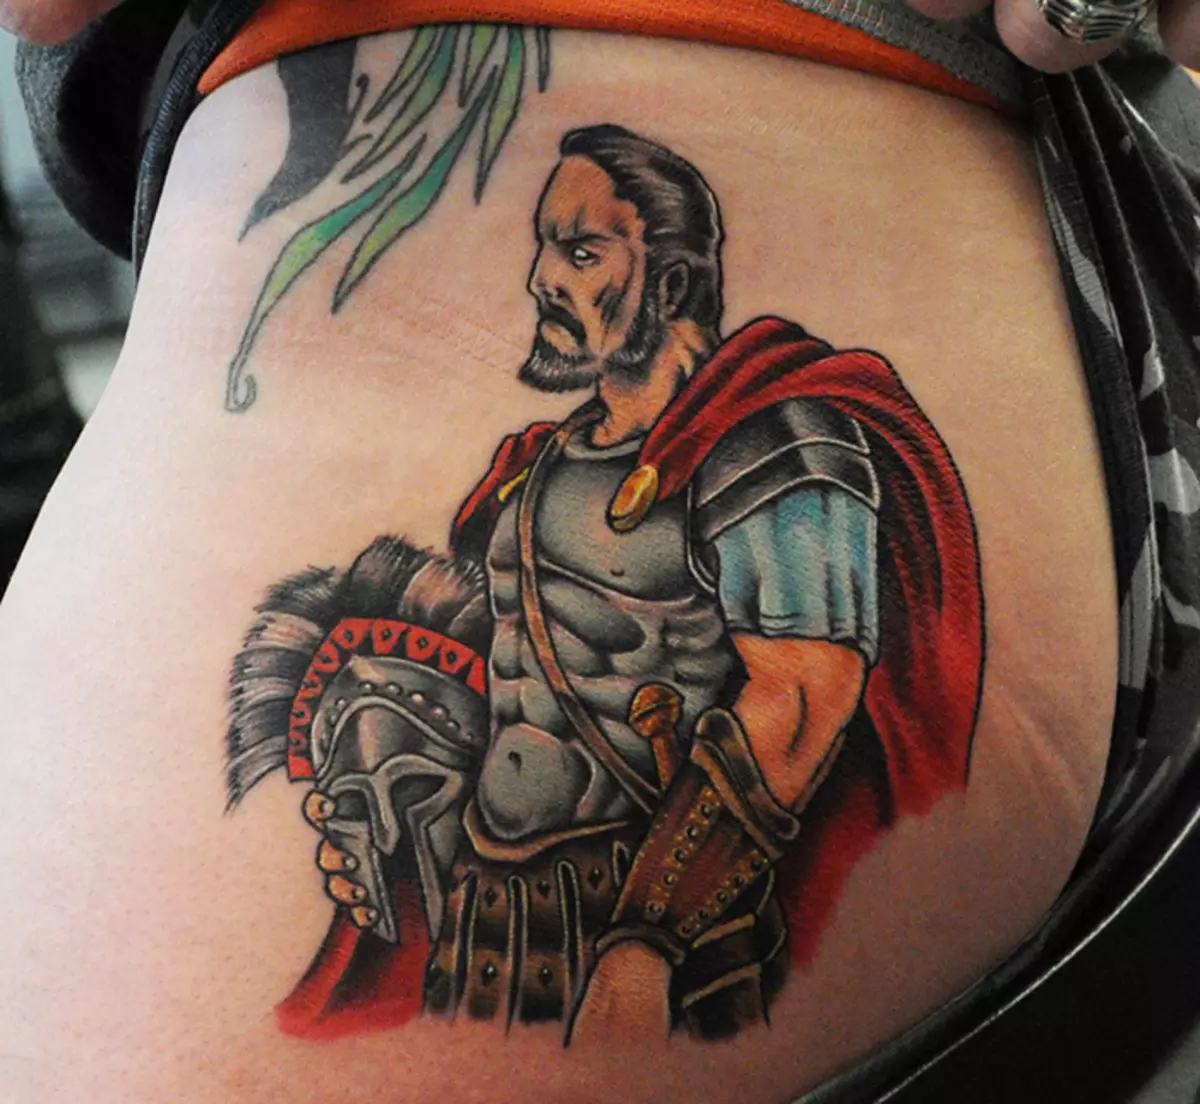 Rimska tetovaža: tetovaža s legionarom drevnih Rima, skica i značenja, Bog Mars, znak legije i kacige, druga tetovaža 299_20